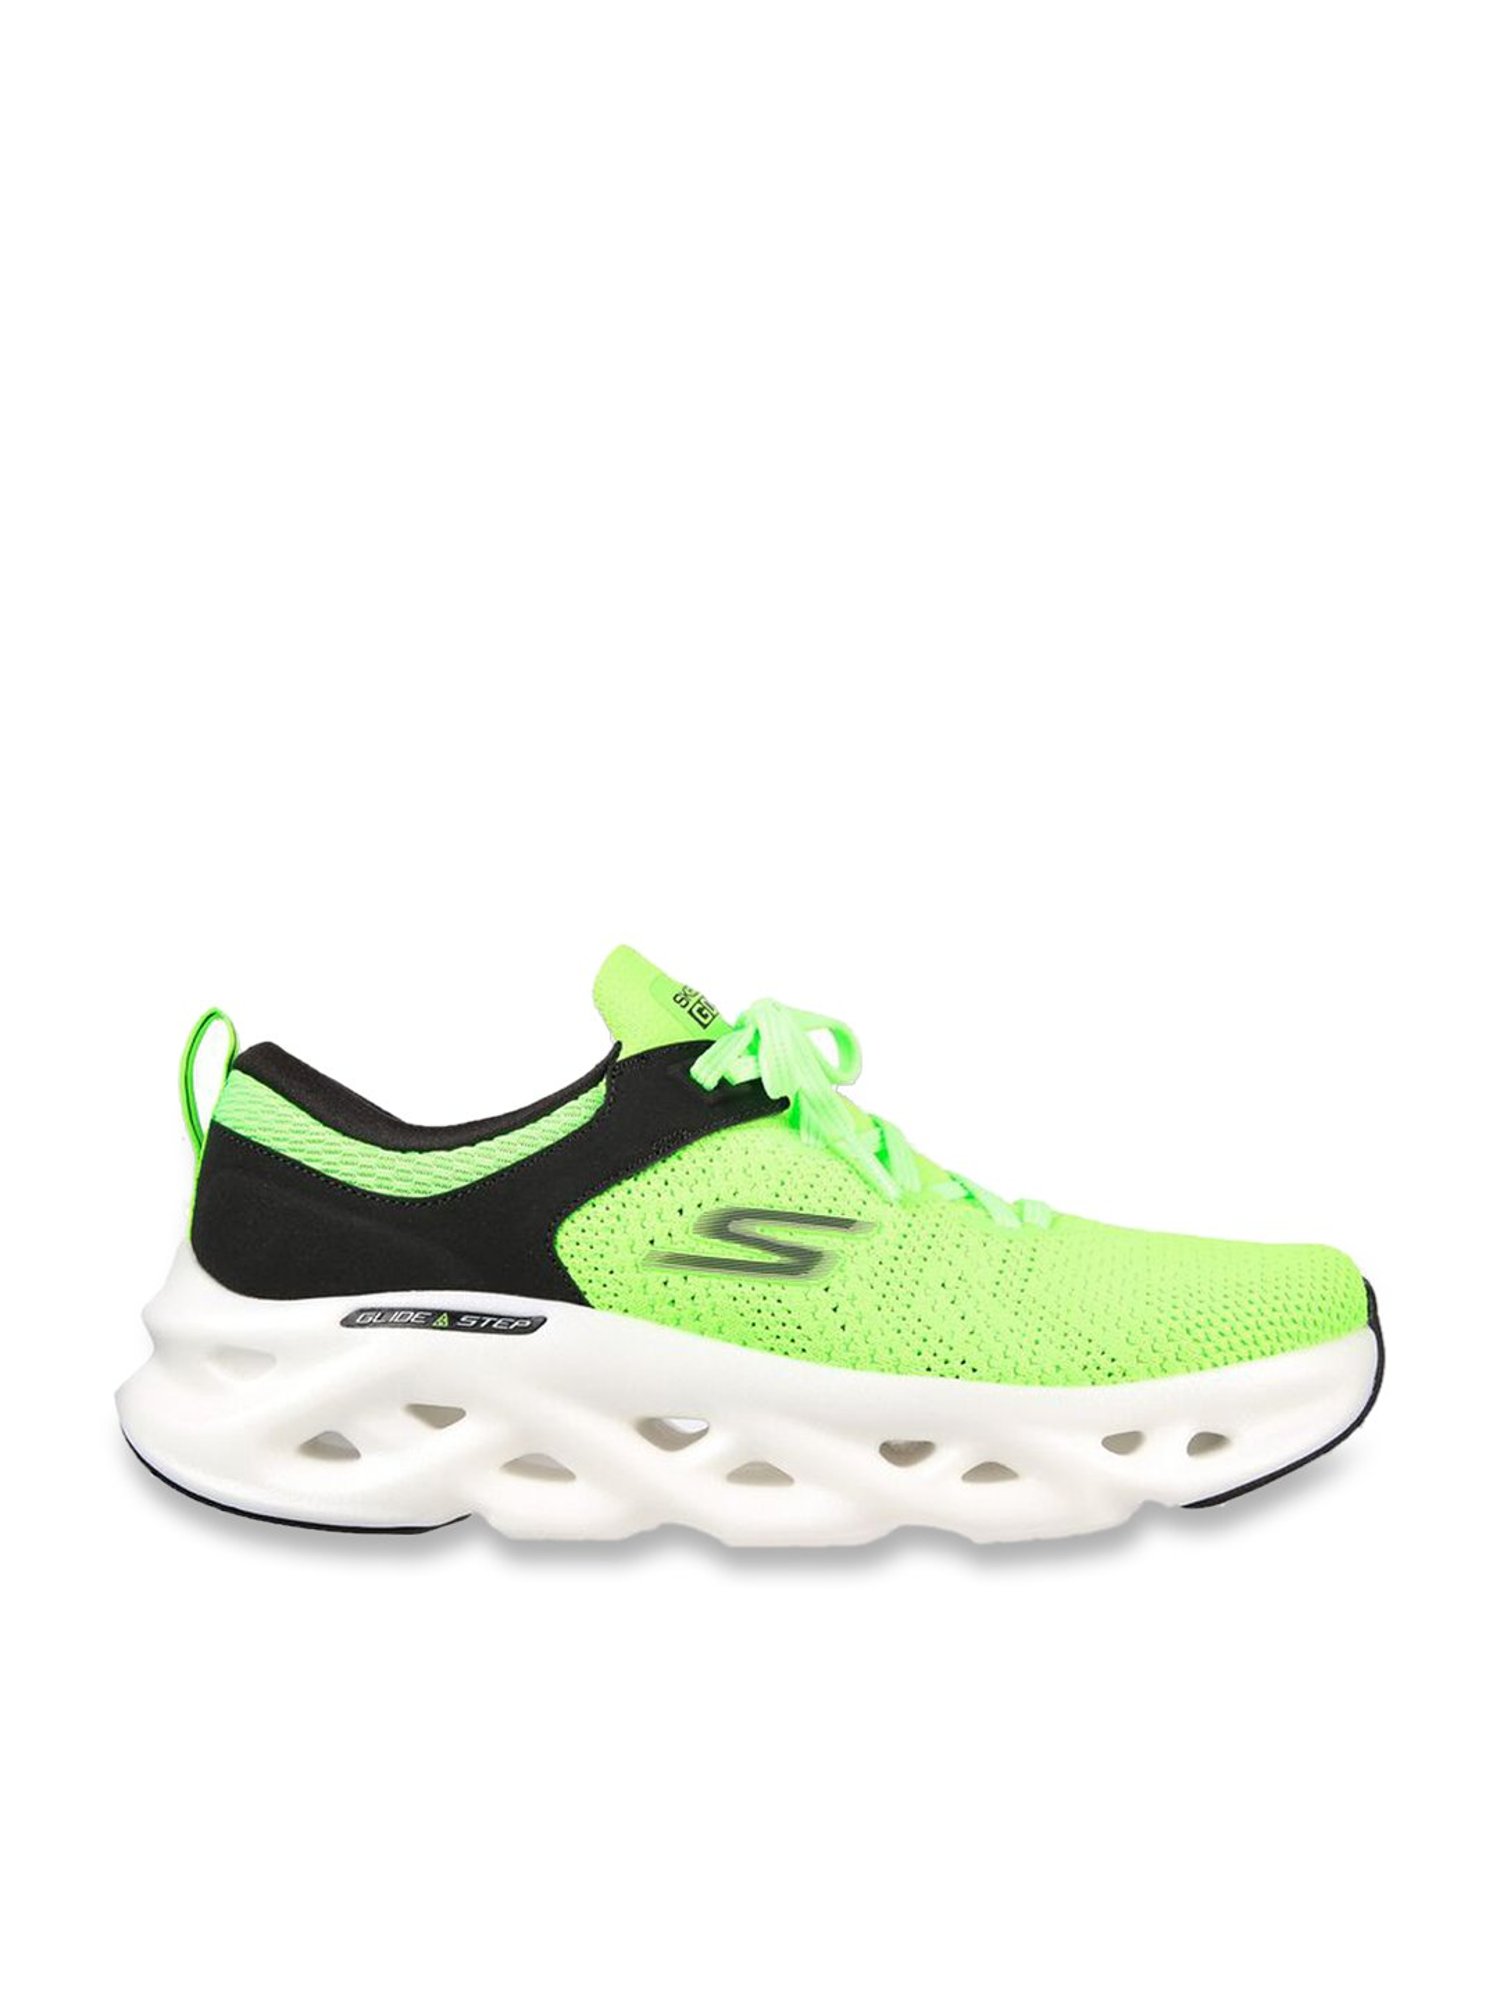 overhemd Vooruitzicht Dubbelzinnig Buy Skechers Men's CH Green Running Shoes for Men at Best Price @ Tata CLiQ